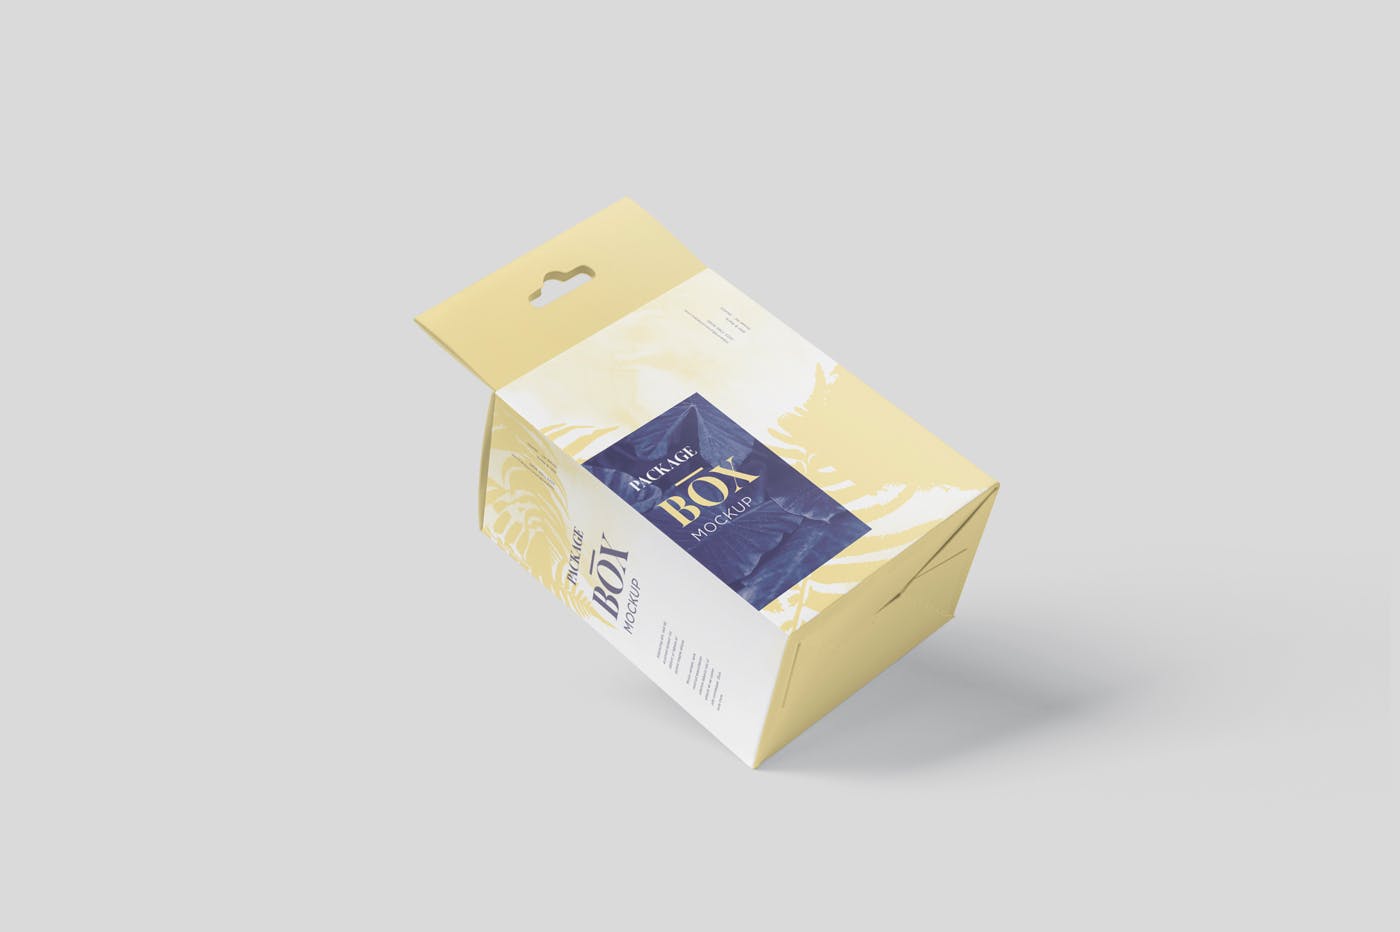 挂耳式扁平矩形包装盒16设计网精选模板 Package Box Mockup Set – Slim Square with Hanger插图(3)